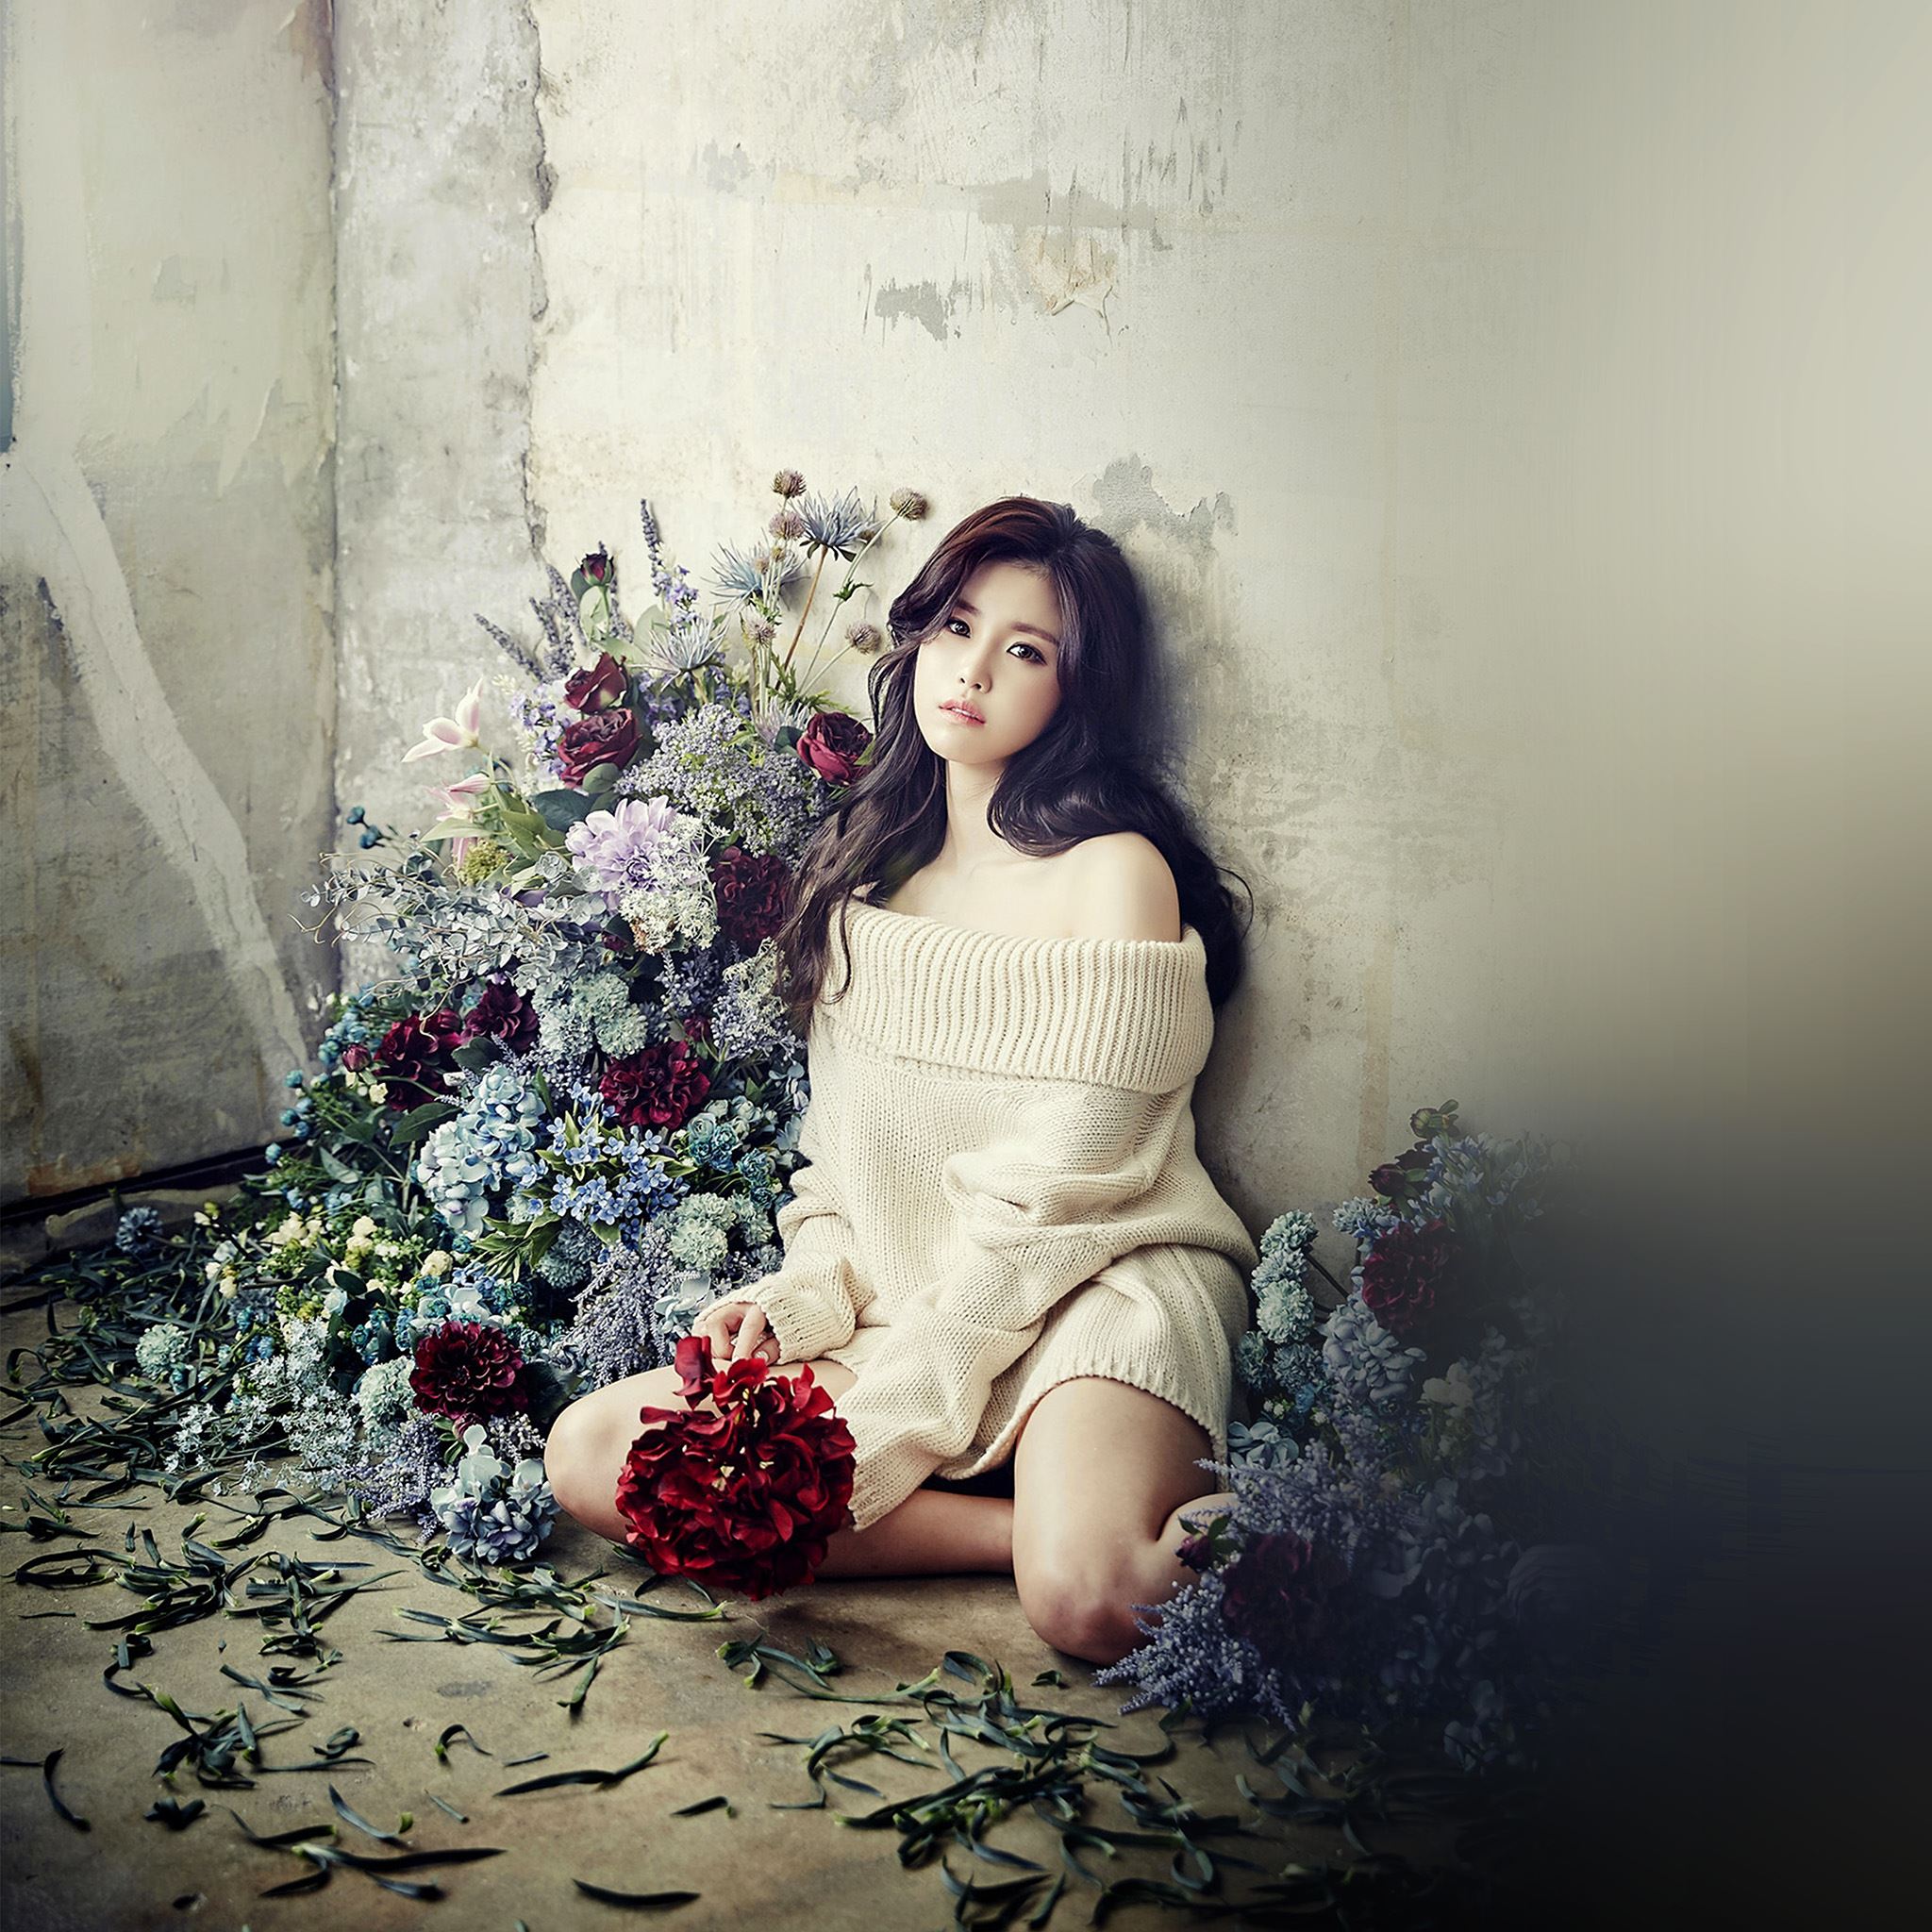 Flower Girl Hyosung Girl Kpop Celebrity iPad Air wallpaper 